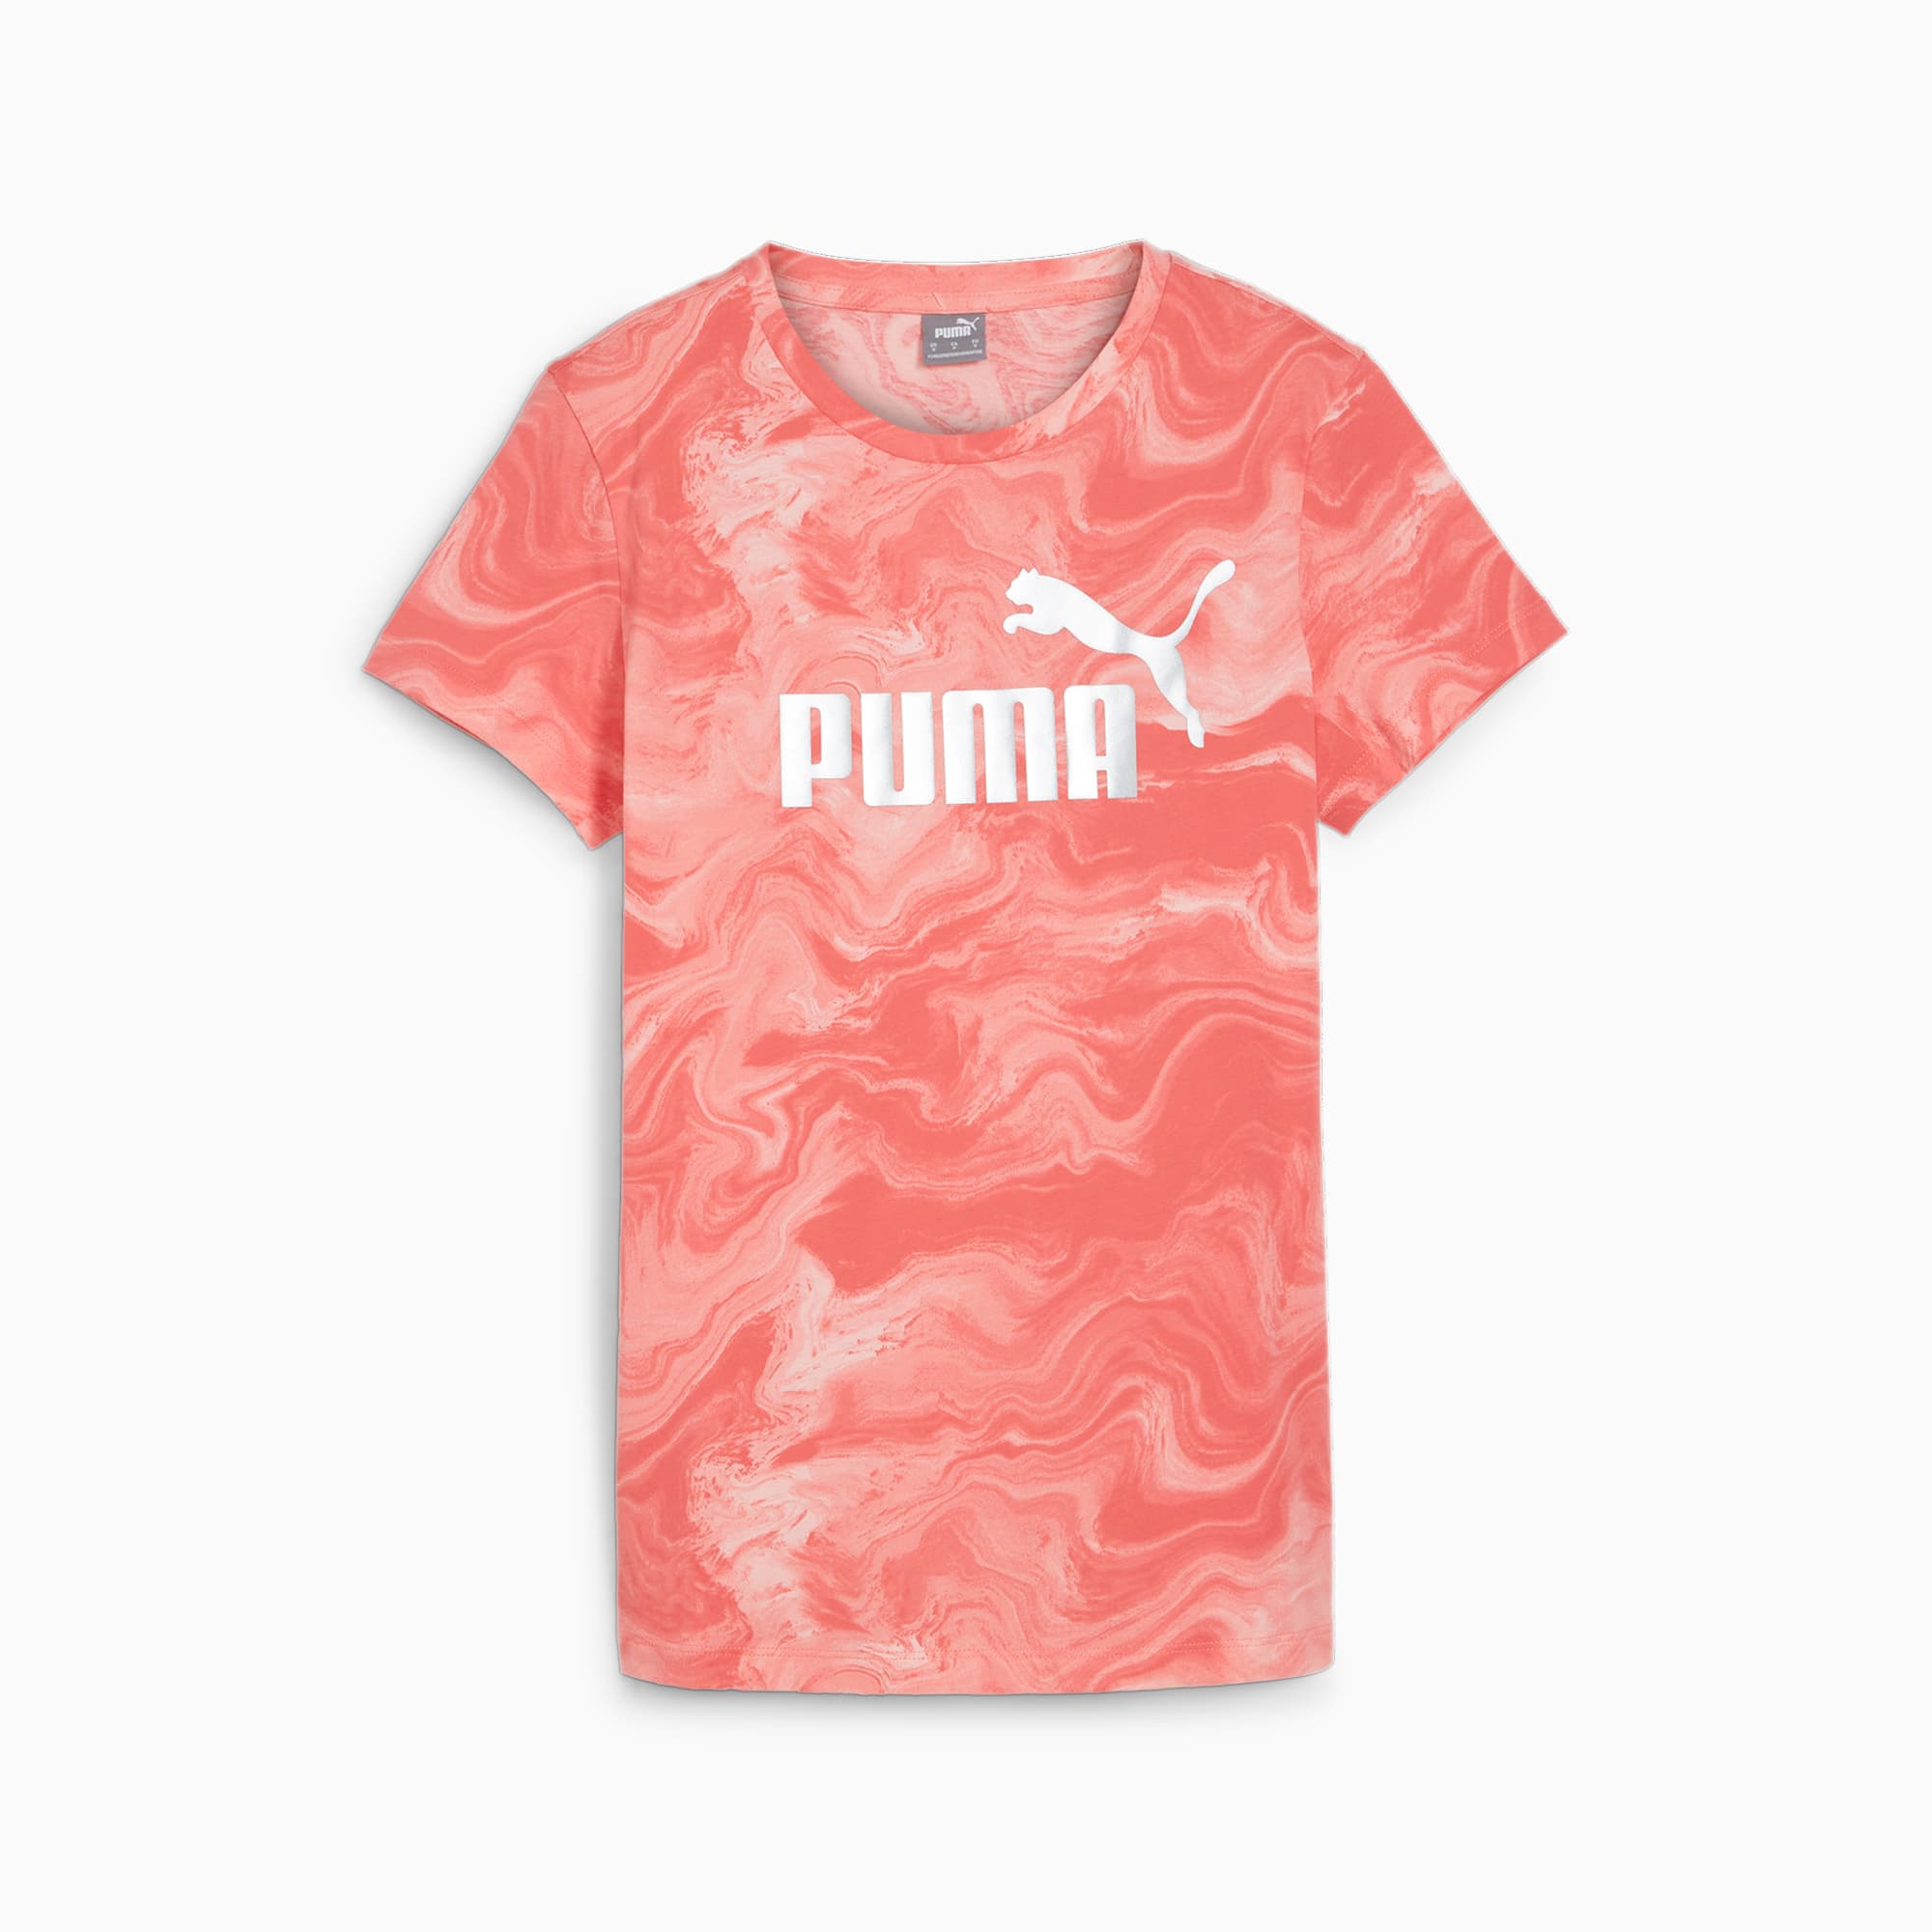 PUMA Ess+ Marbleized Women's T-Shirt, Peach Smoothie, Size M, Clothing